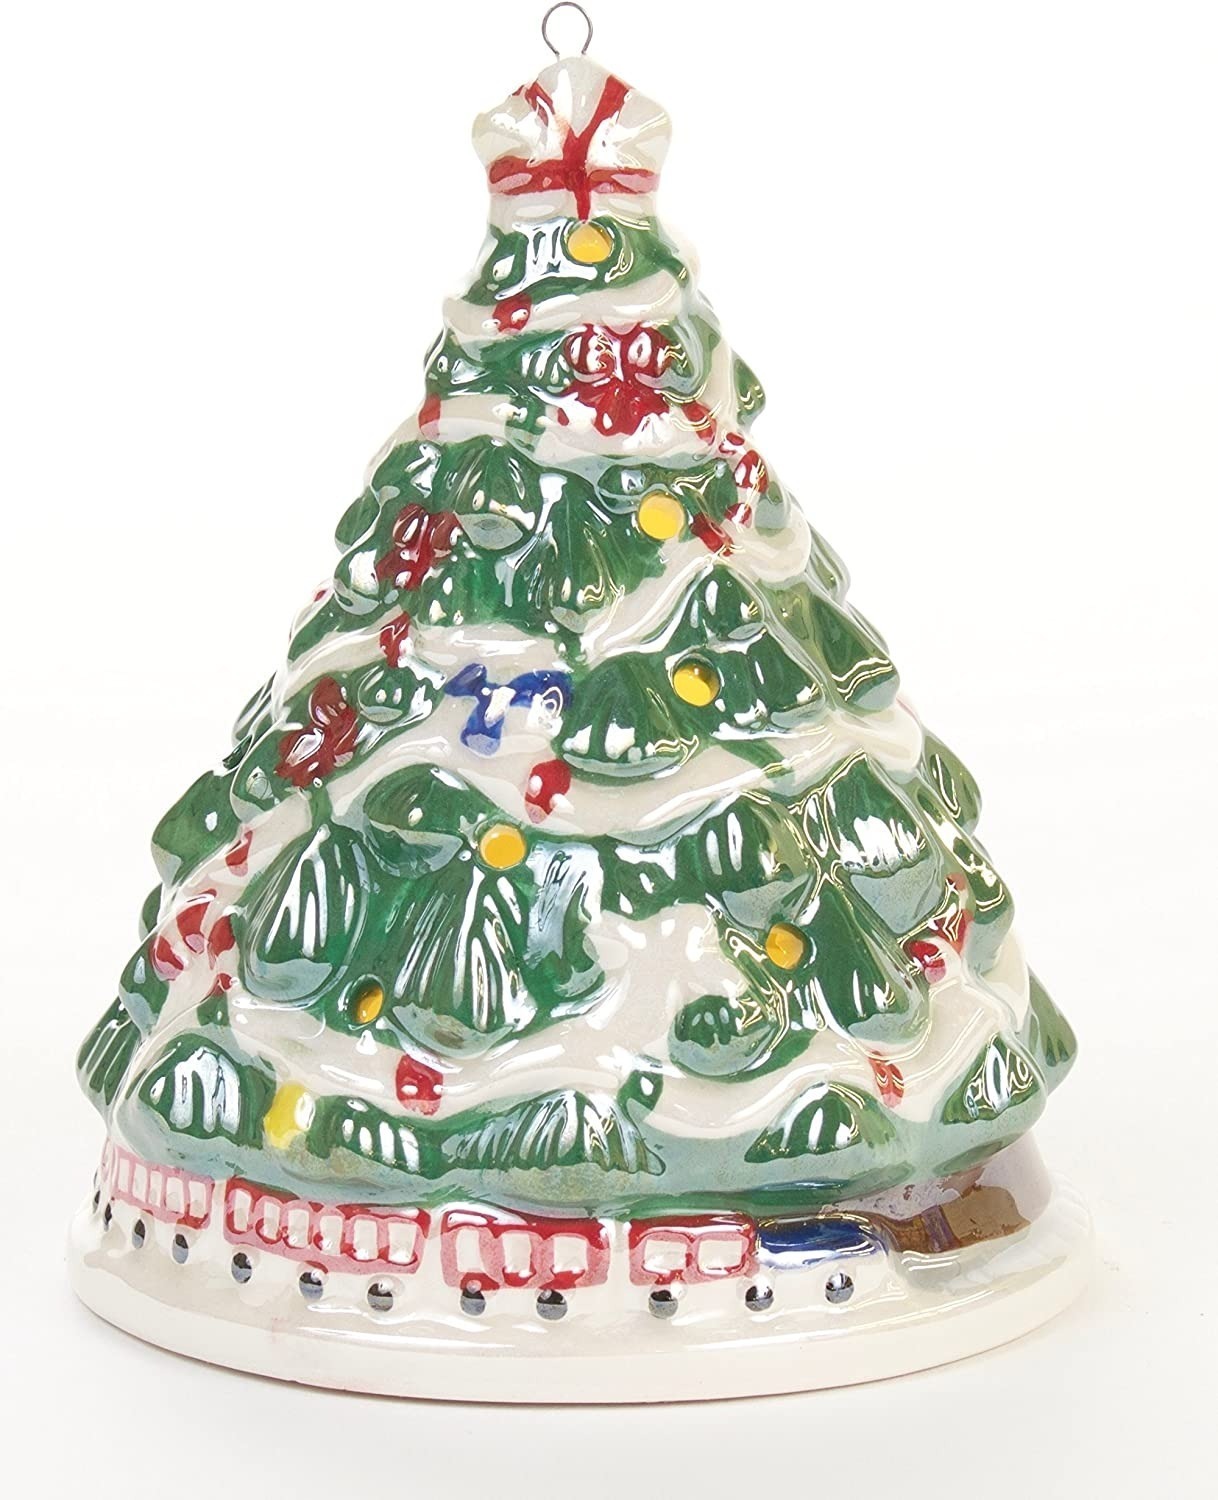 Plushible Christmas Sale: Illuminated Porcelain Christmas Ornament $5, Gitzy Light Up Plush $5, 24" Santa Plush w/ belt $20 & More + Free Shipping on Orders $19+